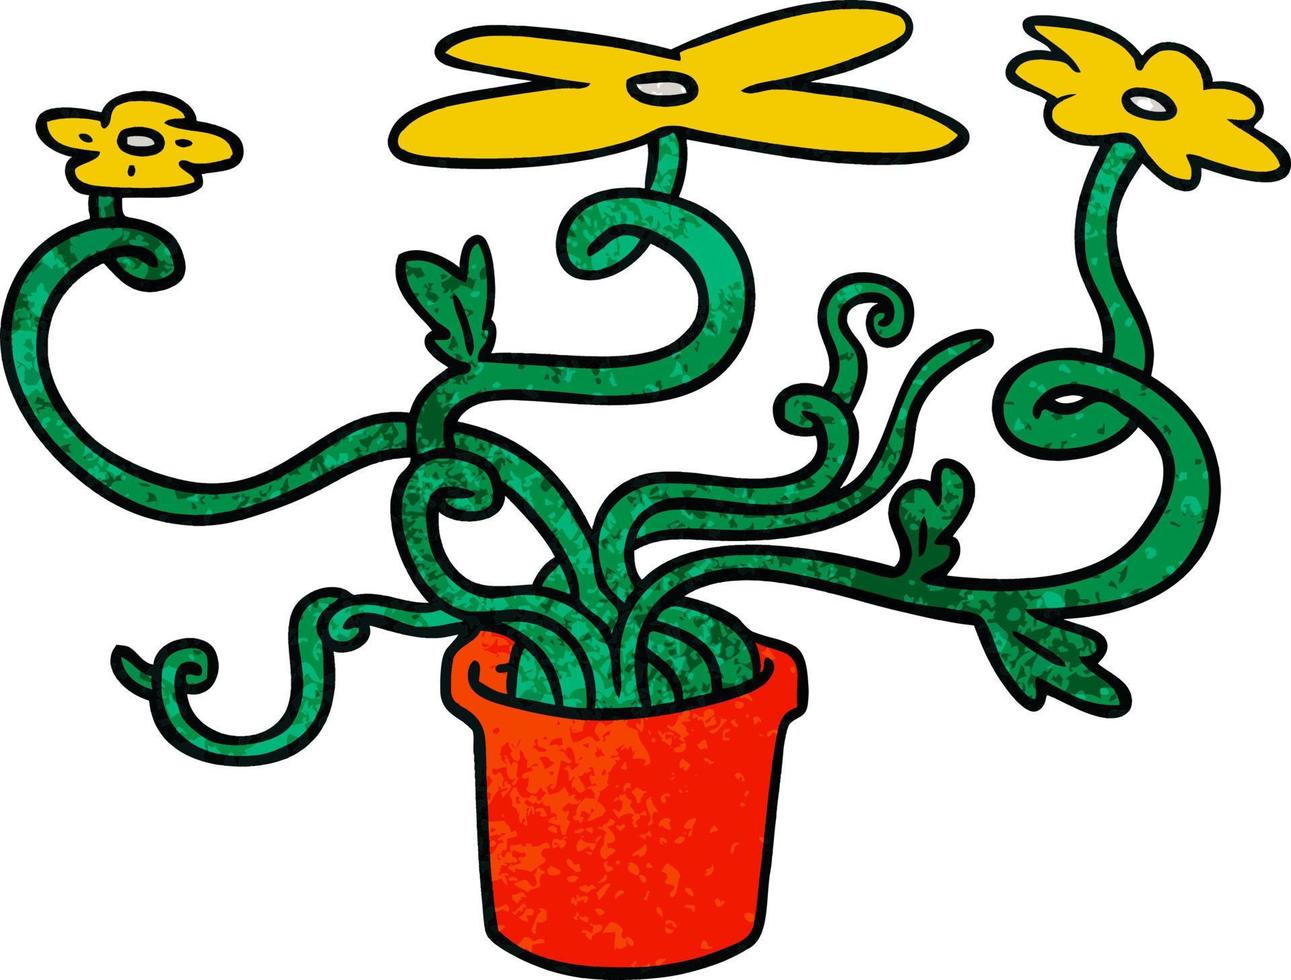 textured cartoon doodle of a flower plant vector